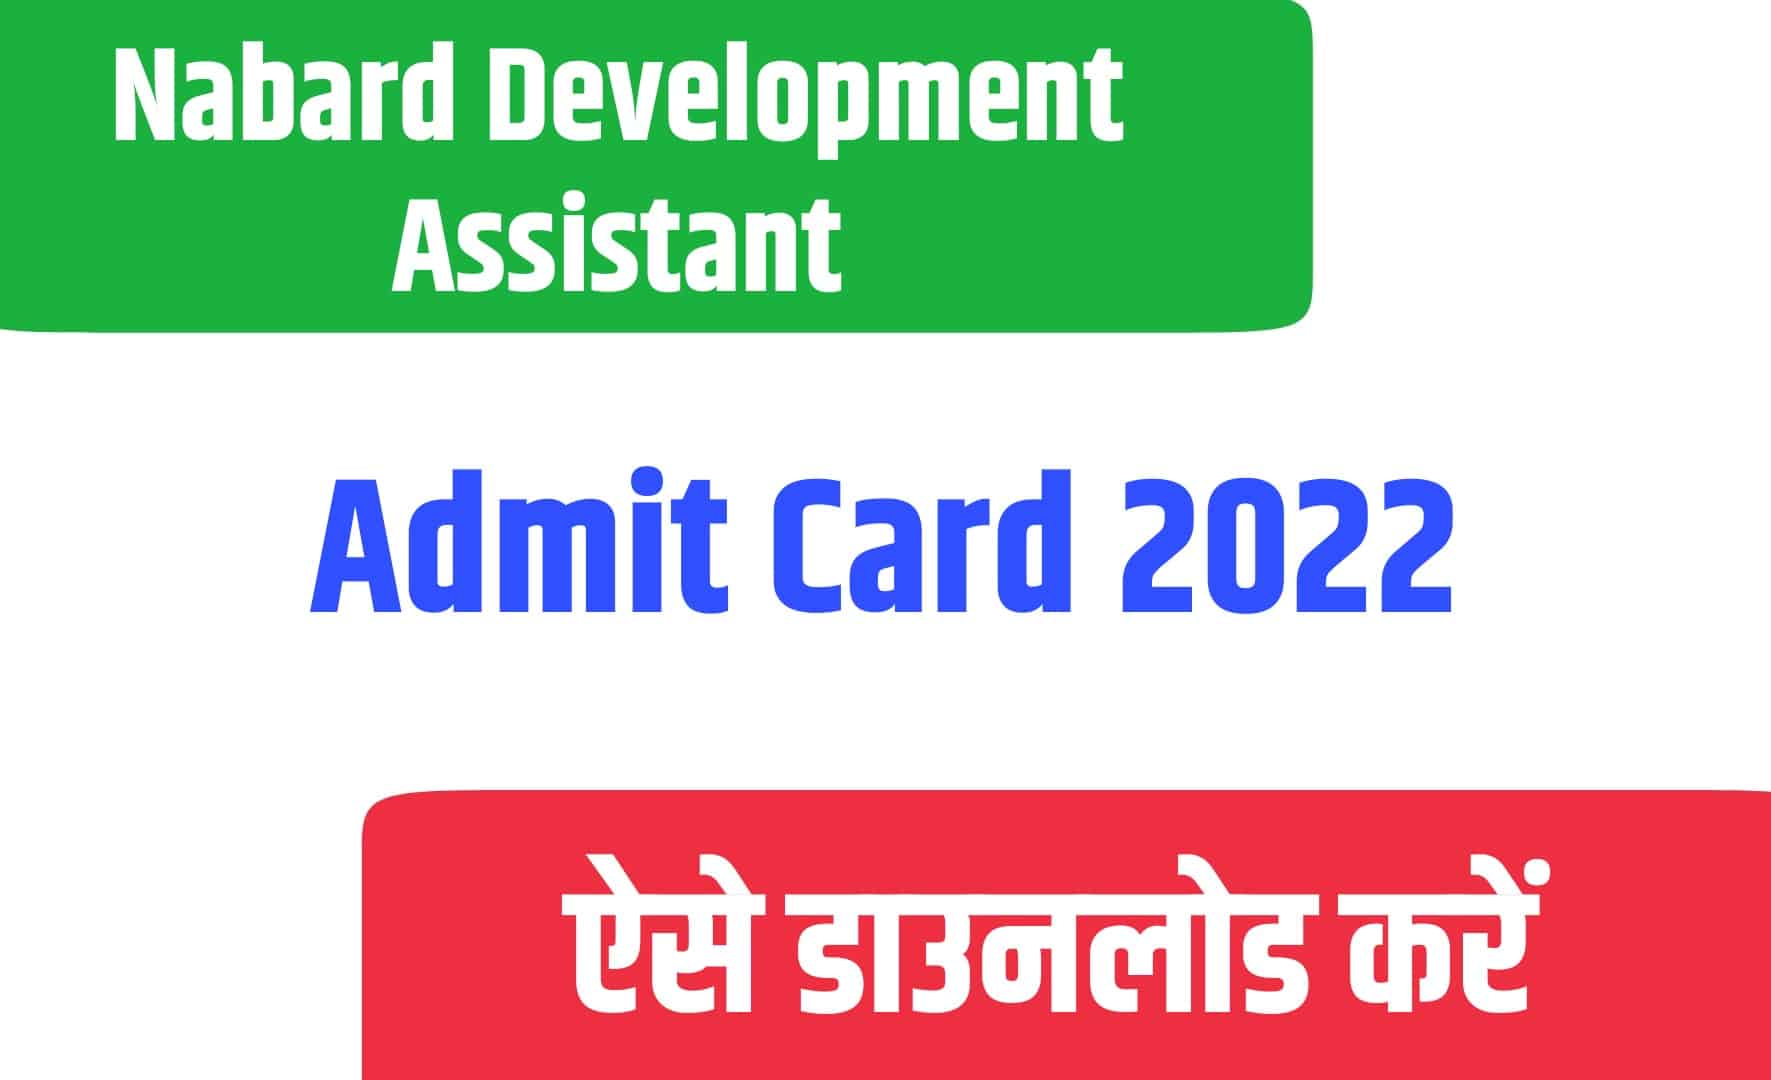 Nabard Development Assistant Admit Card 2022 | नाबार्ड डेवलपमेंट असिस्टेंट एडमिट कार्ड 2022